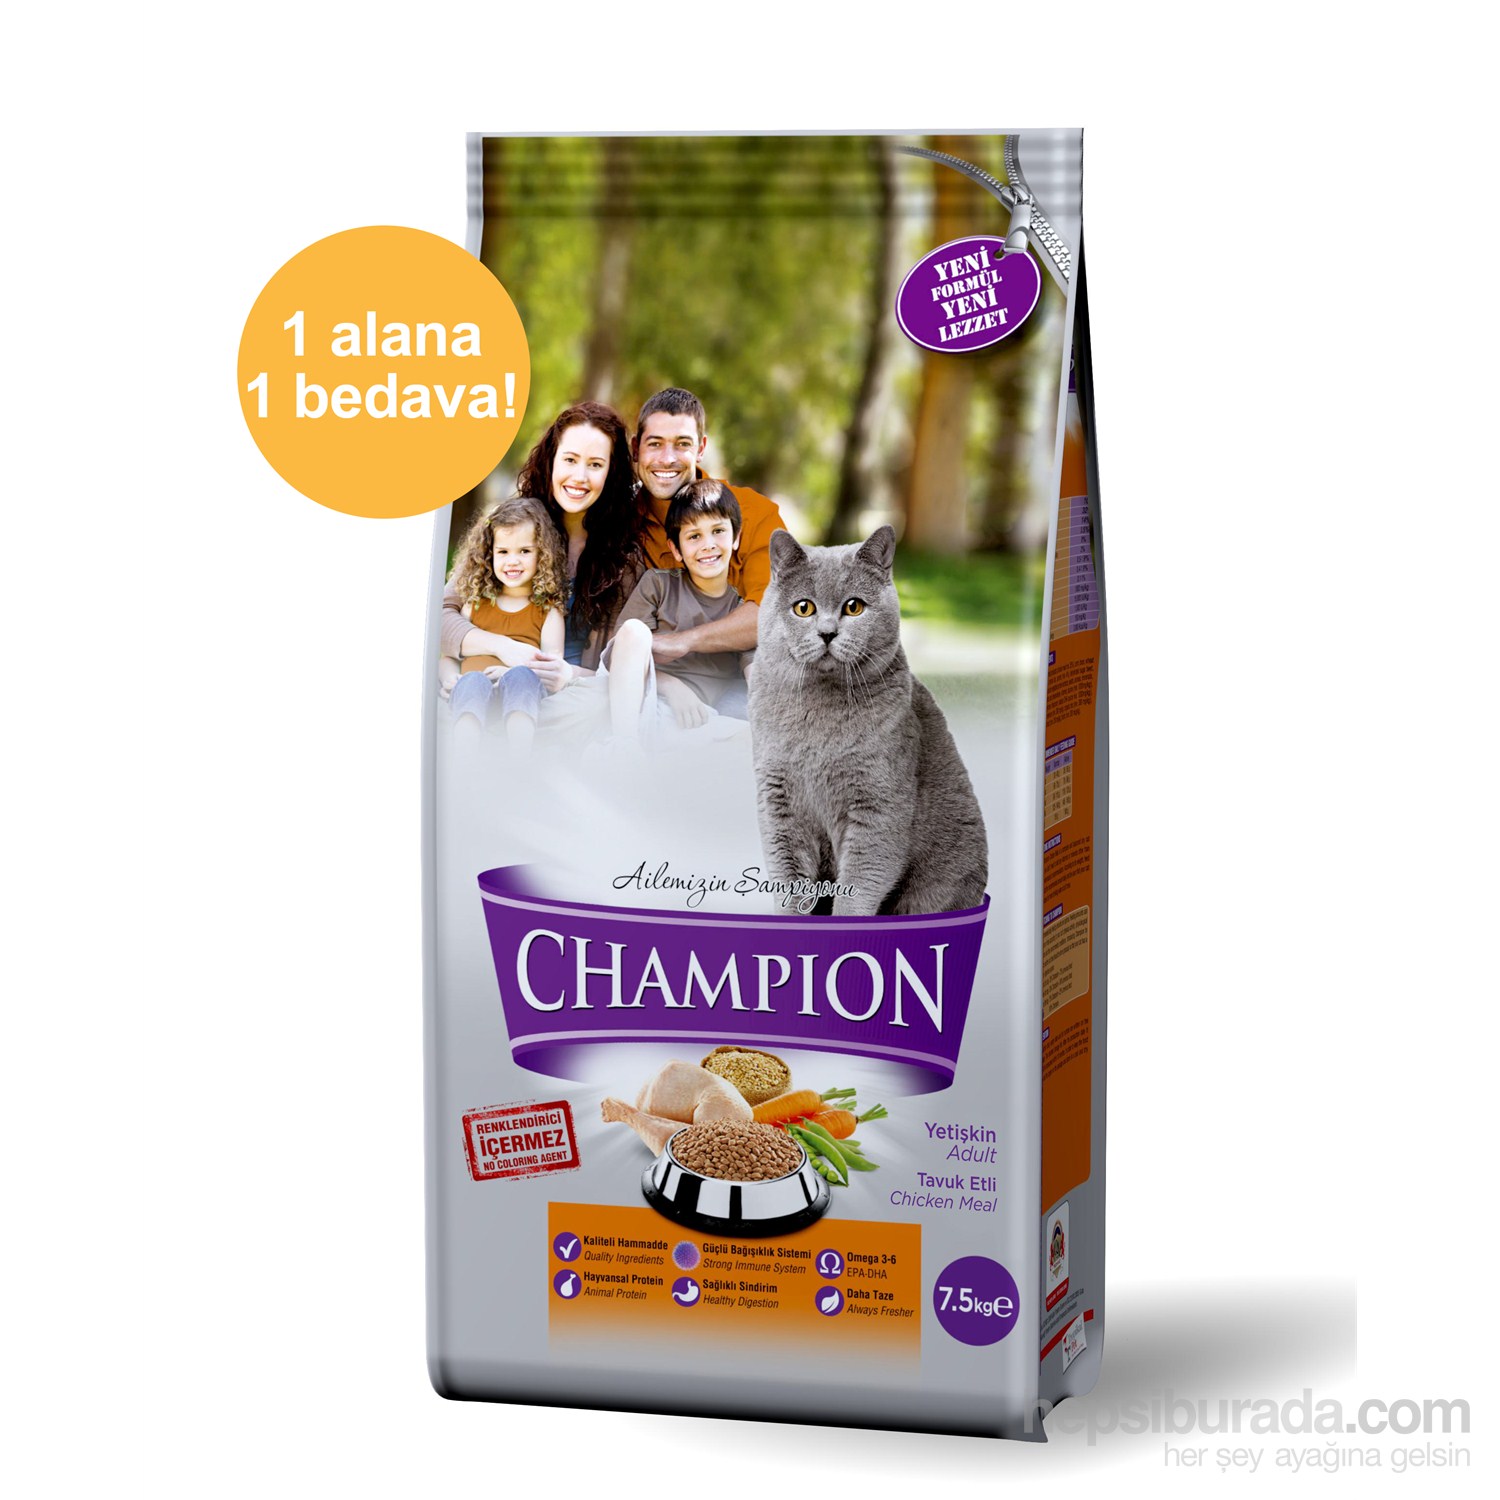 Champion Tavuk Etli Yetişkin Kedi Maması 7,5 Kg 1 alana 1 bedava